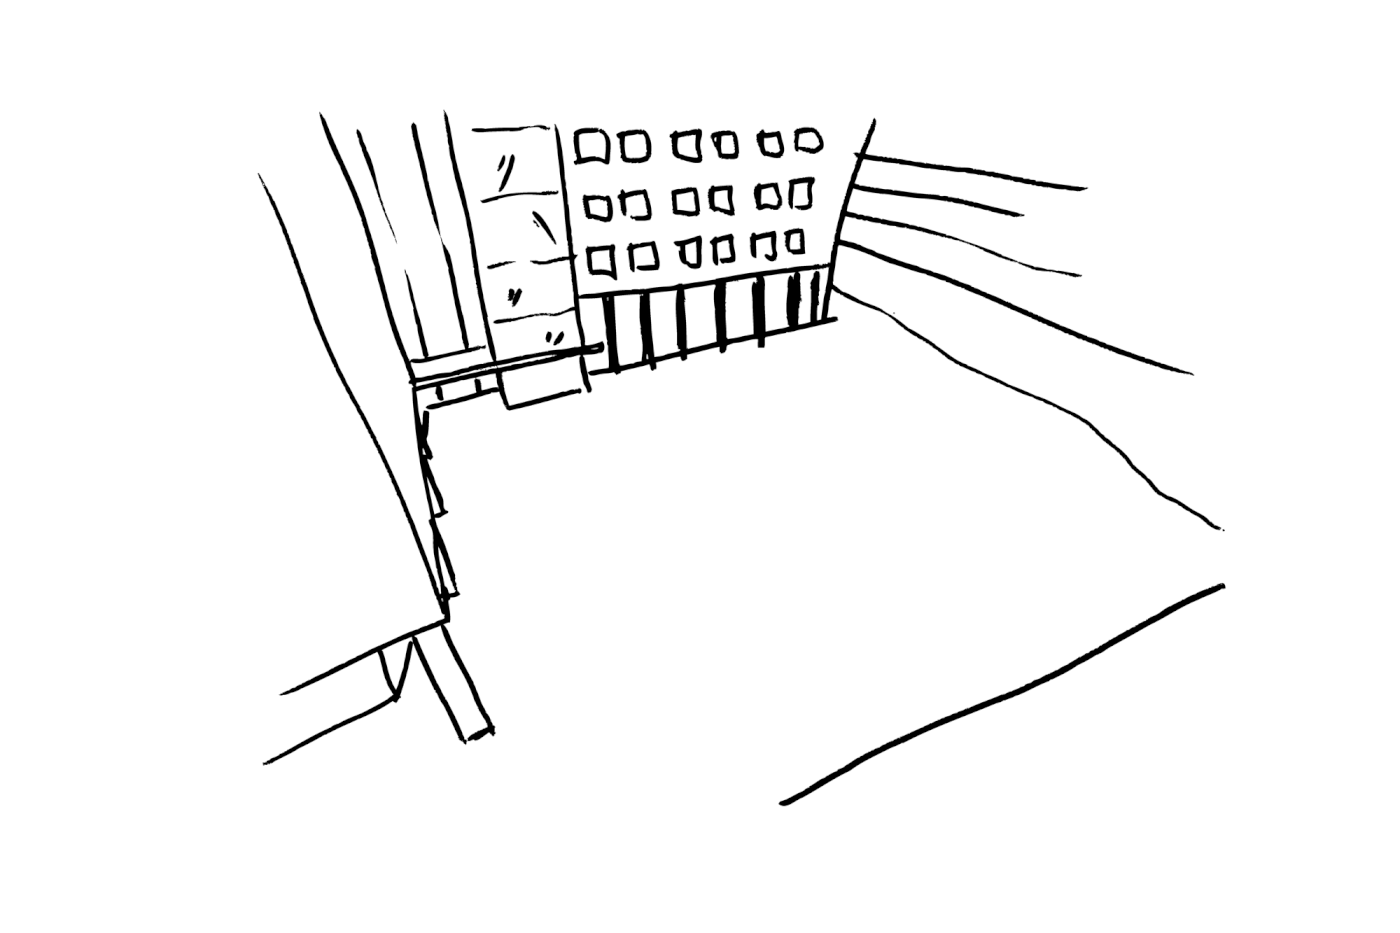 amphitheatre concrete cultural Landscape mode:lina modelina architekci Office poland warsaw